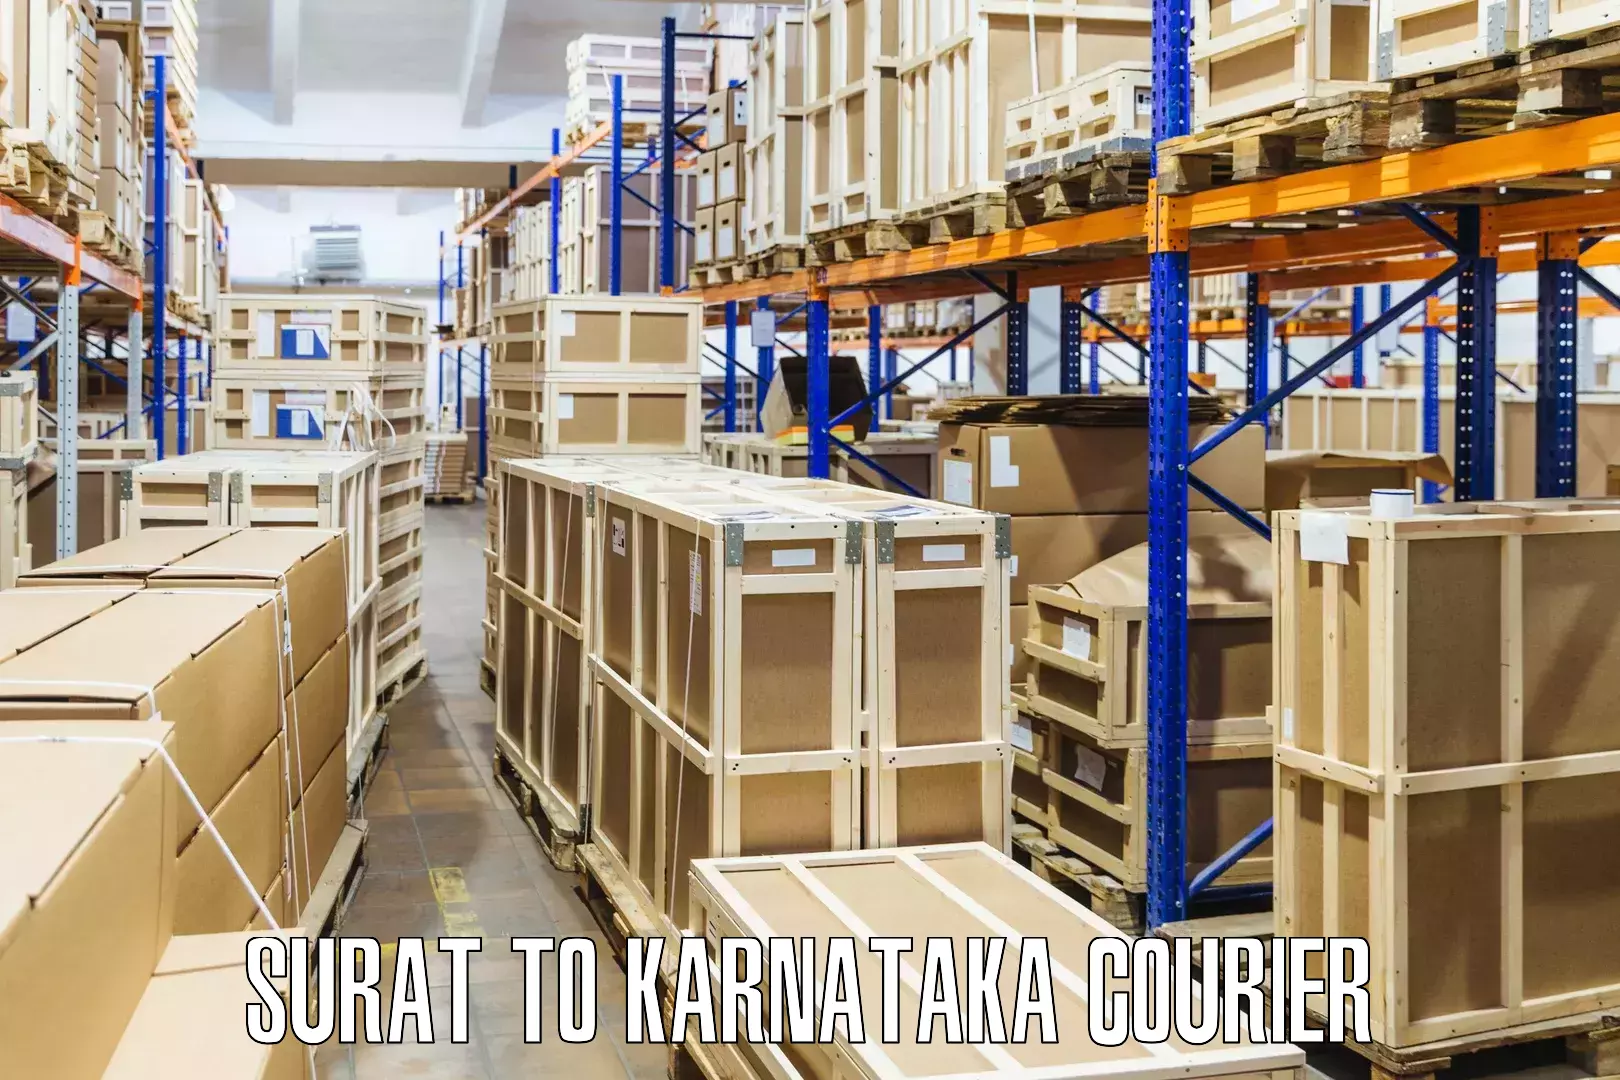 High-capacity parcel service Surat to Banavara